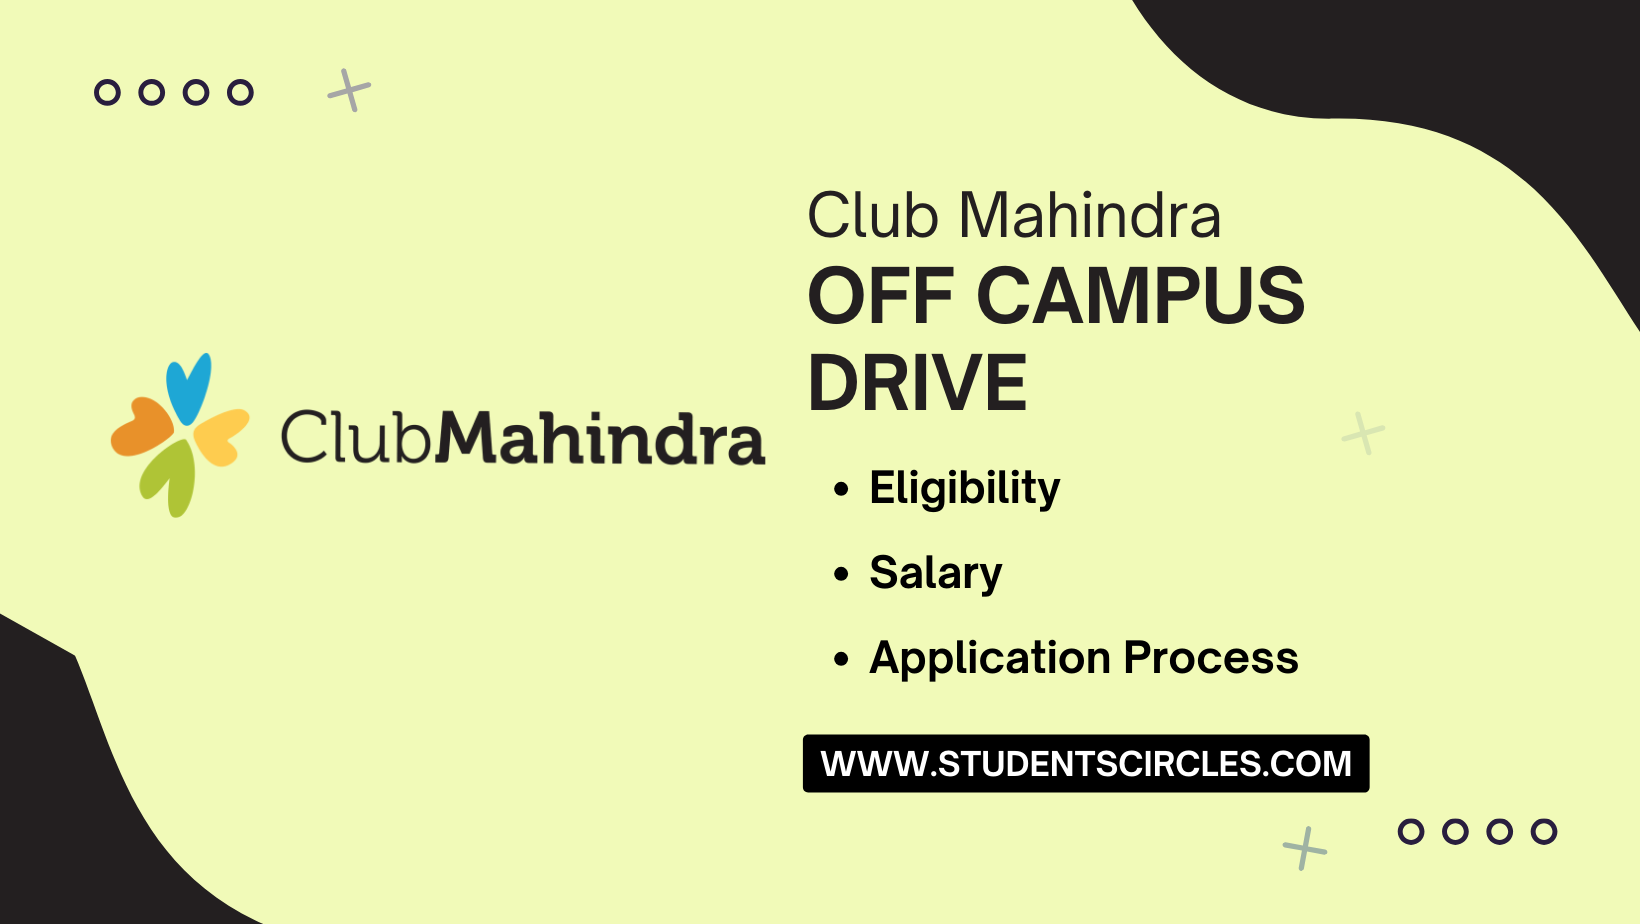 Club Mahindra Off Campus Drive